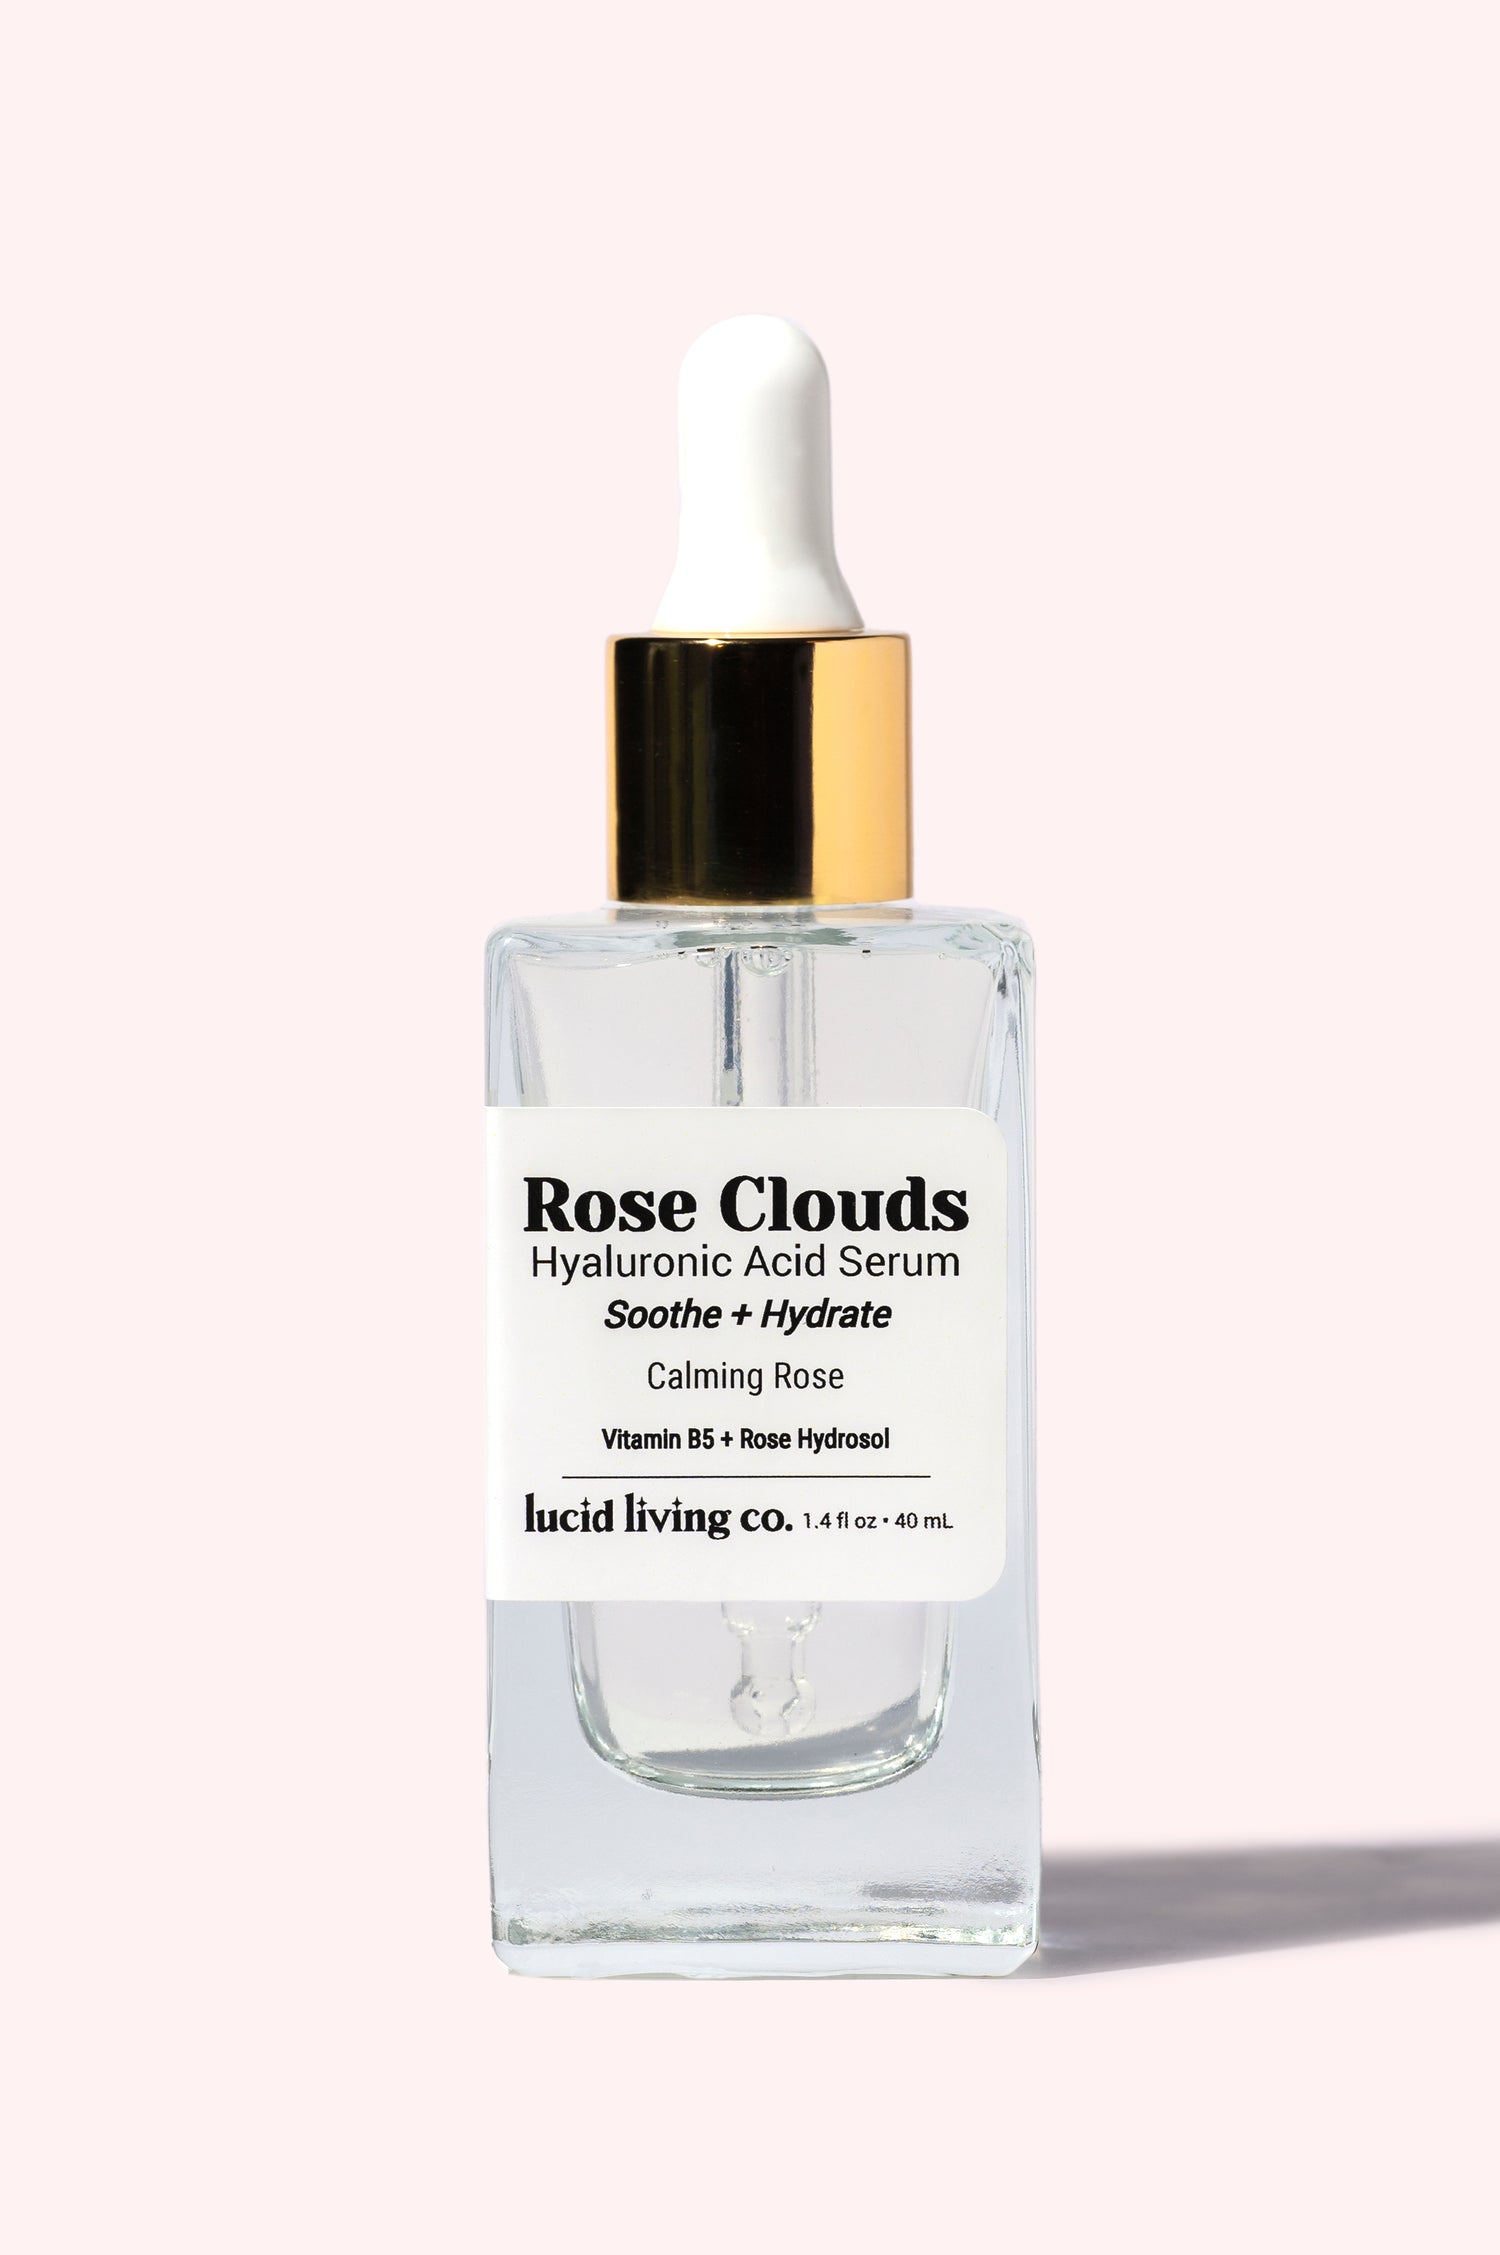 Rose Clouds Hyaluronic Acid Serum